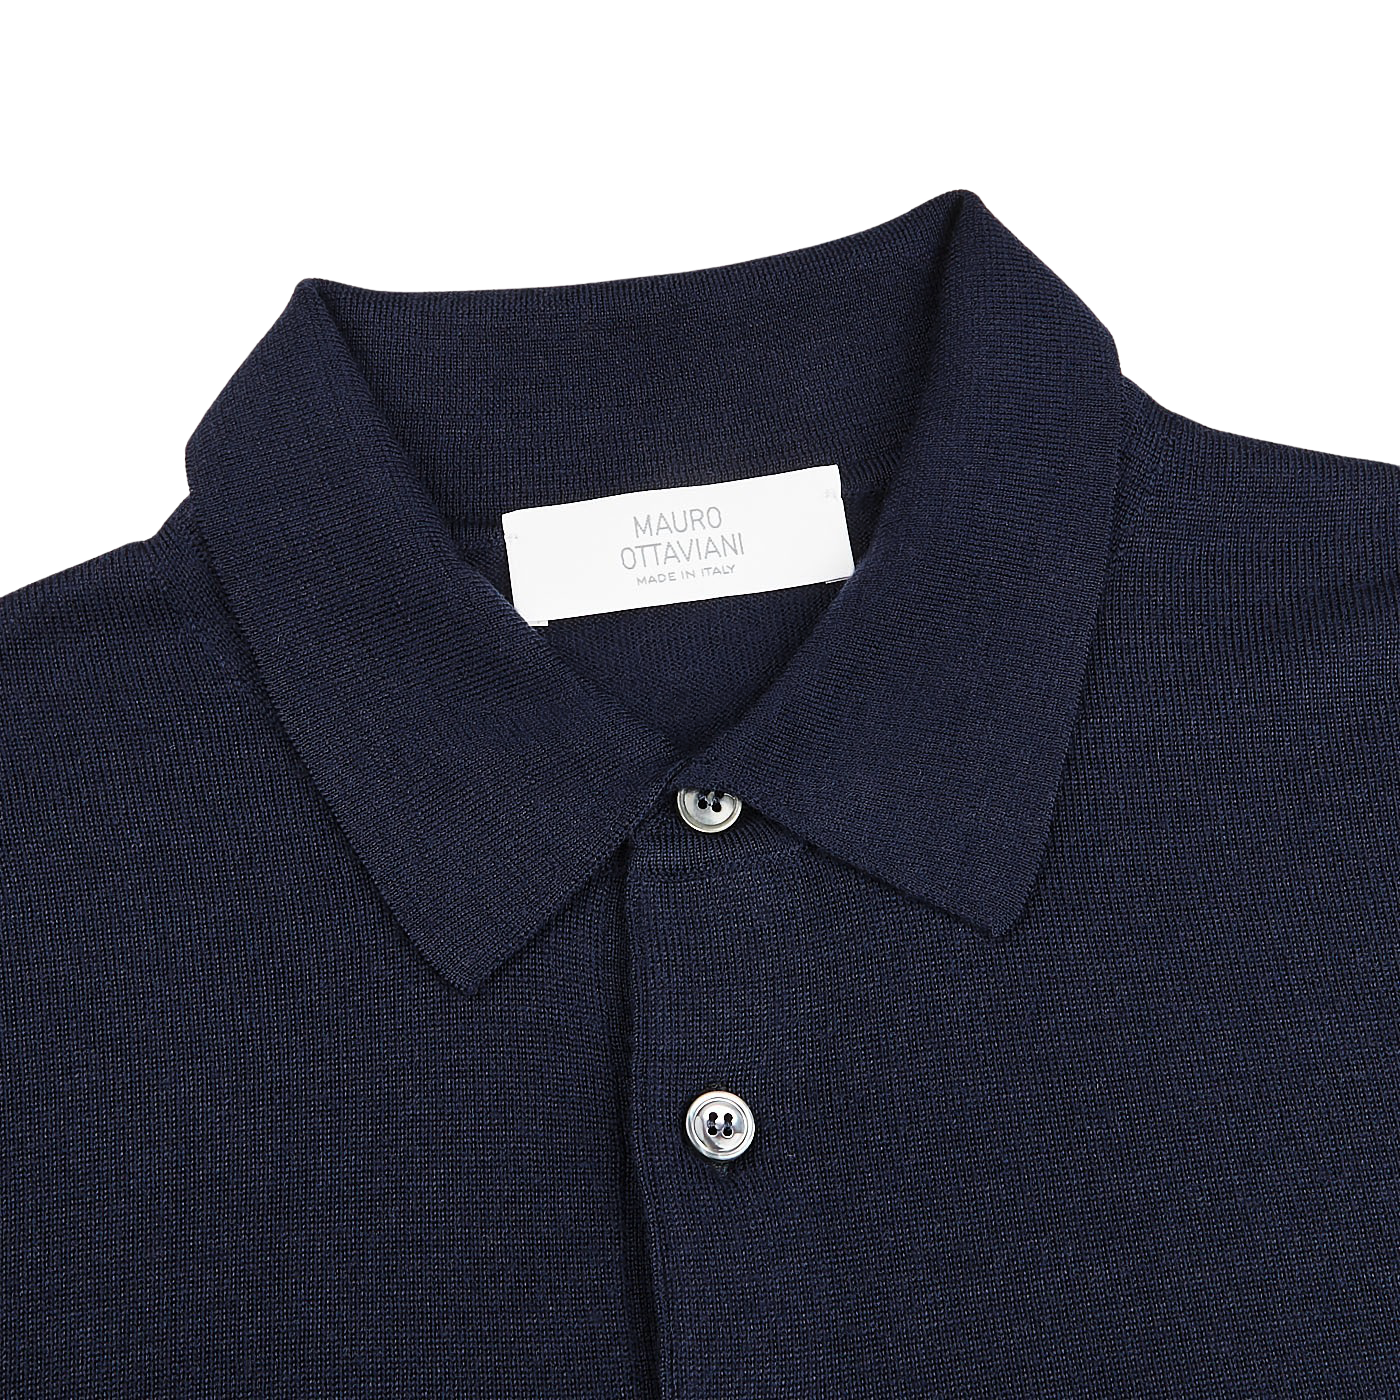 Mauro Ottaviani Dark Blue 16 Gauge Merino Wool Polo Shirt Collar